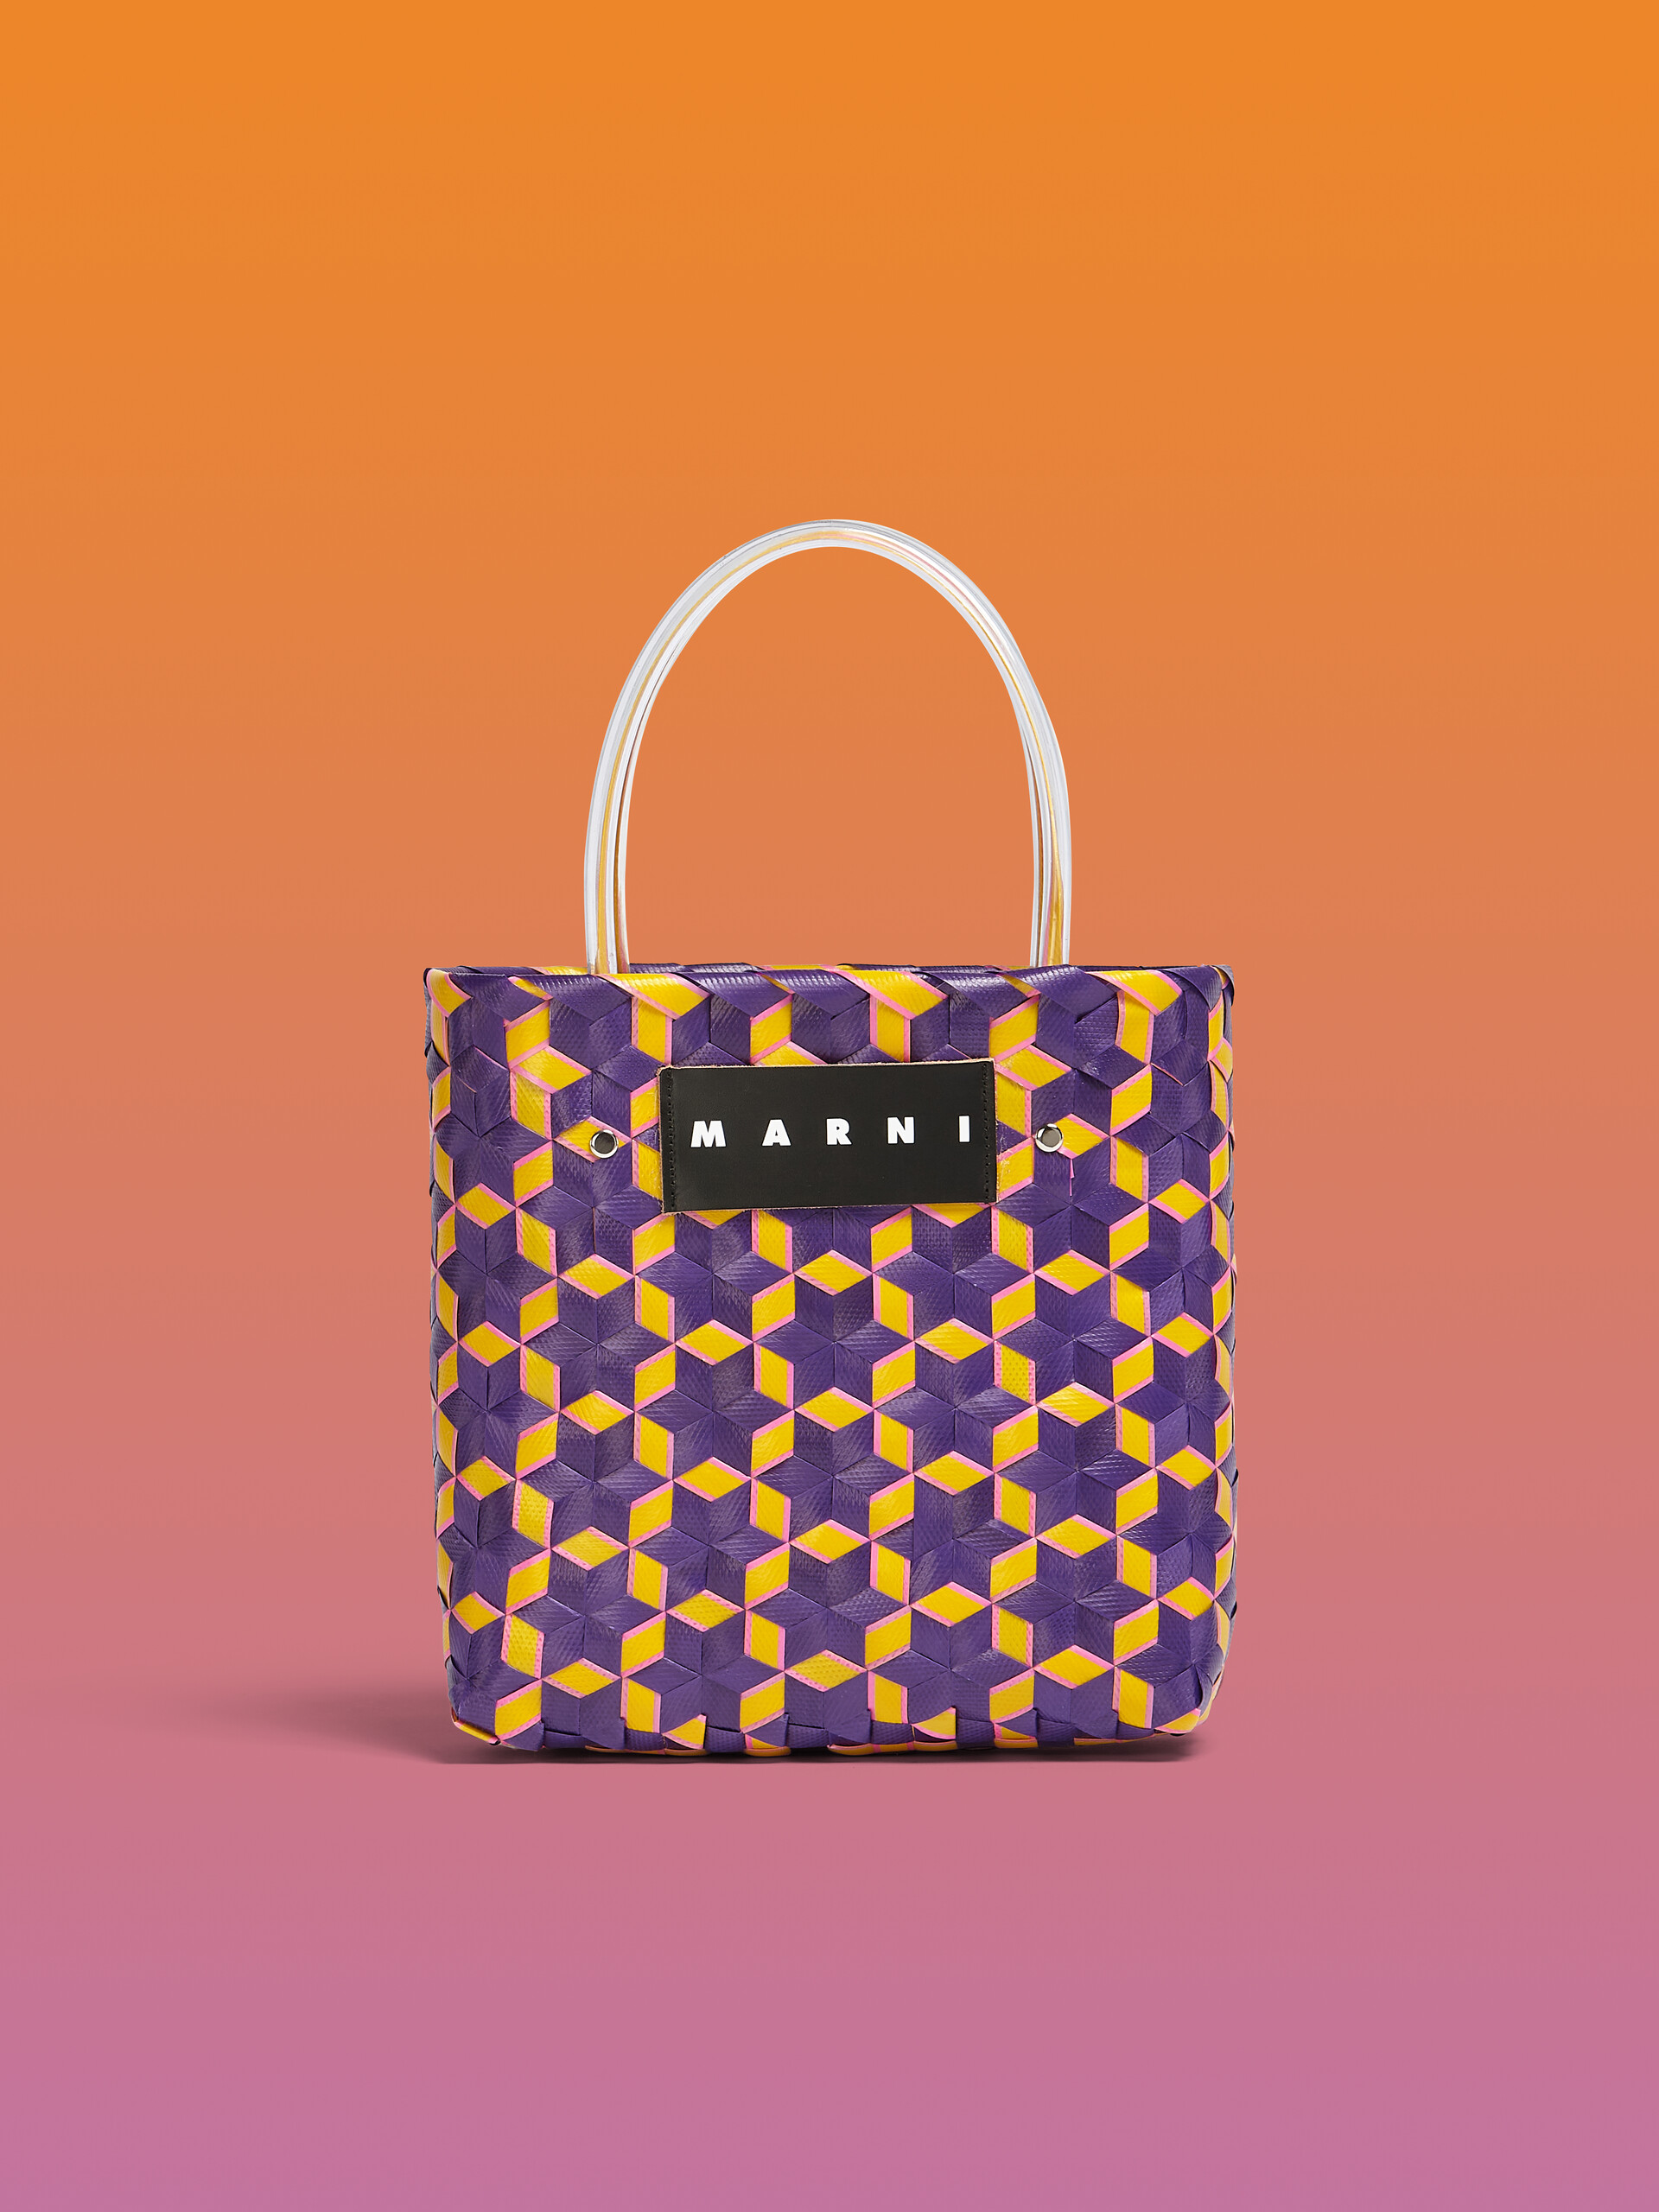 MARNI MARKET bag in purple star woven material - Bags - Image 1